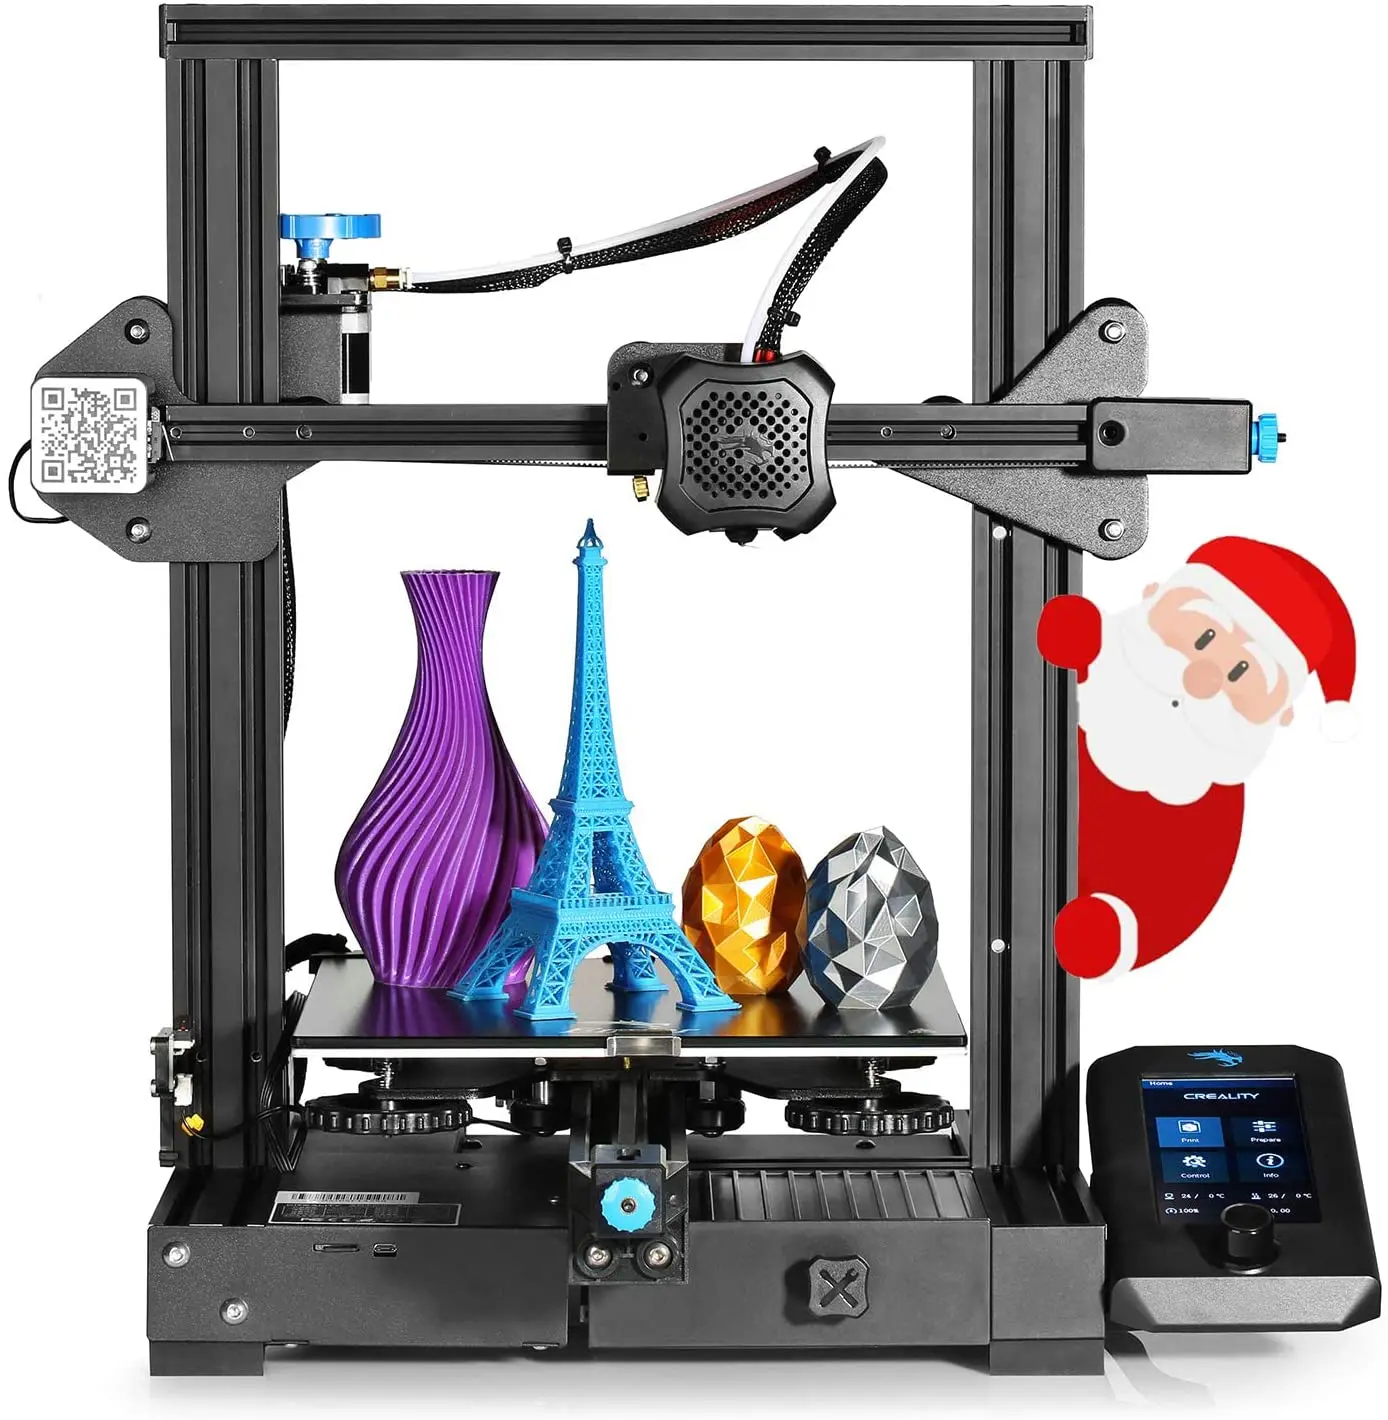 Creality Kit imprimante 3D